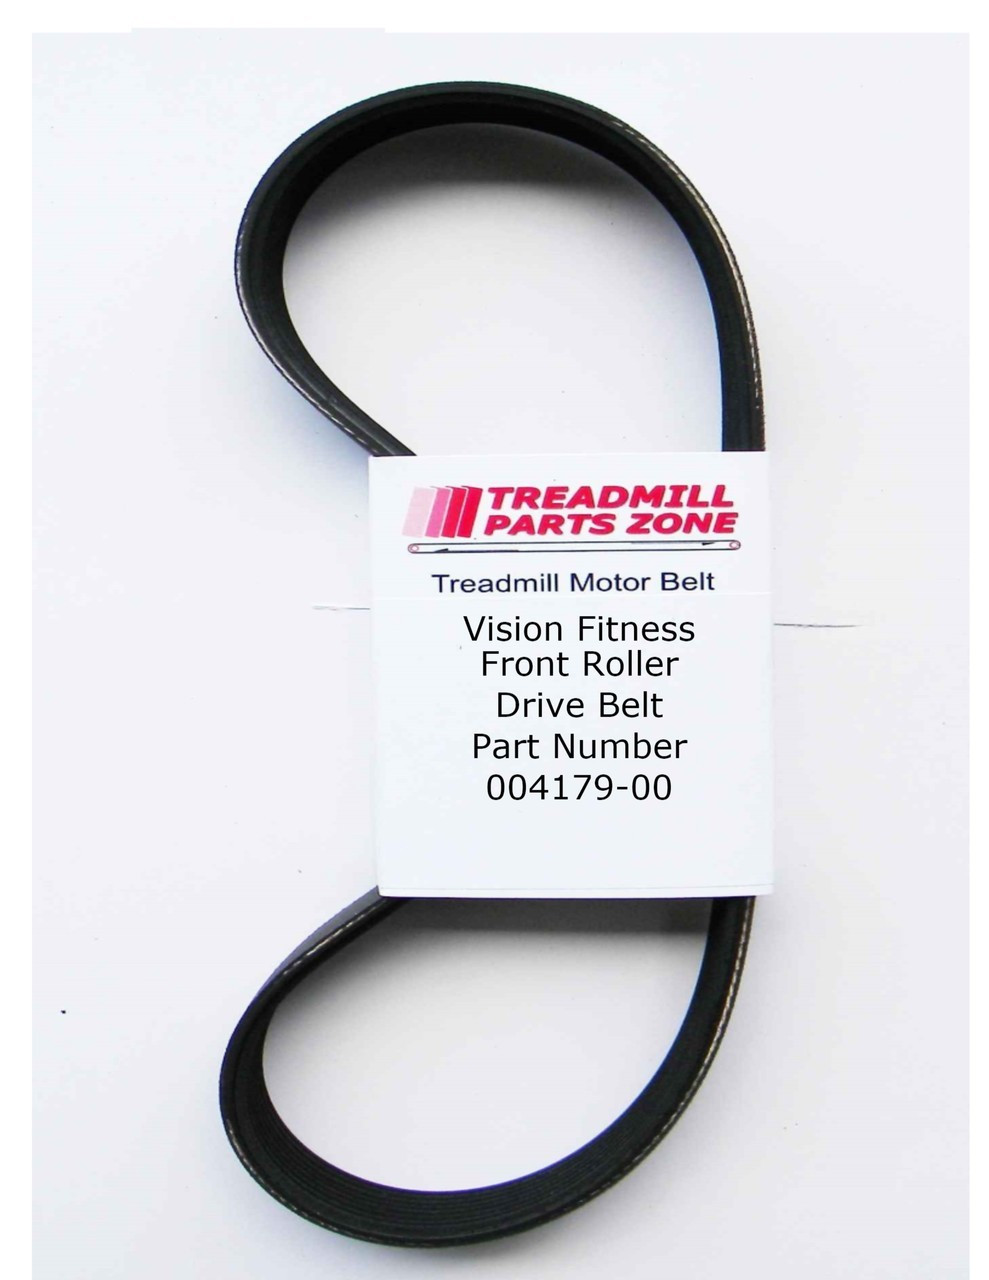 Vision Treadmill Model T243 T9700S Front Roller Drive Belt Part Number 004179-00